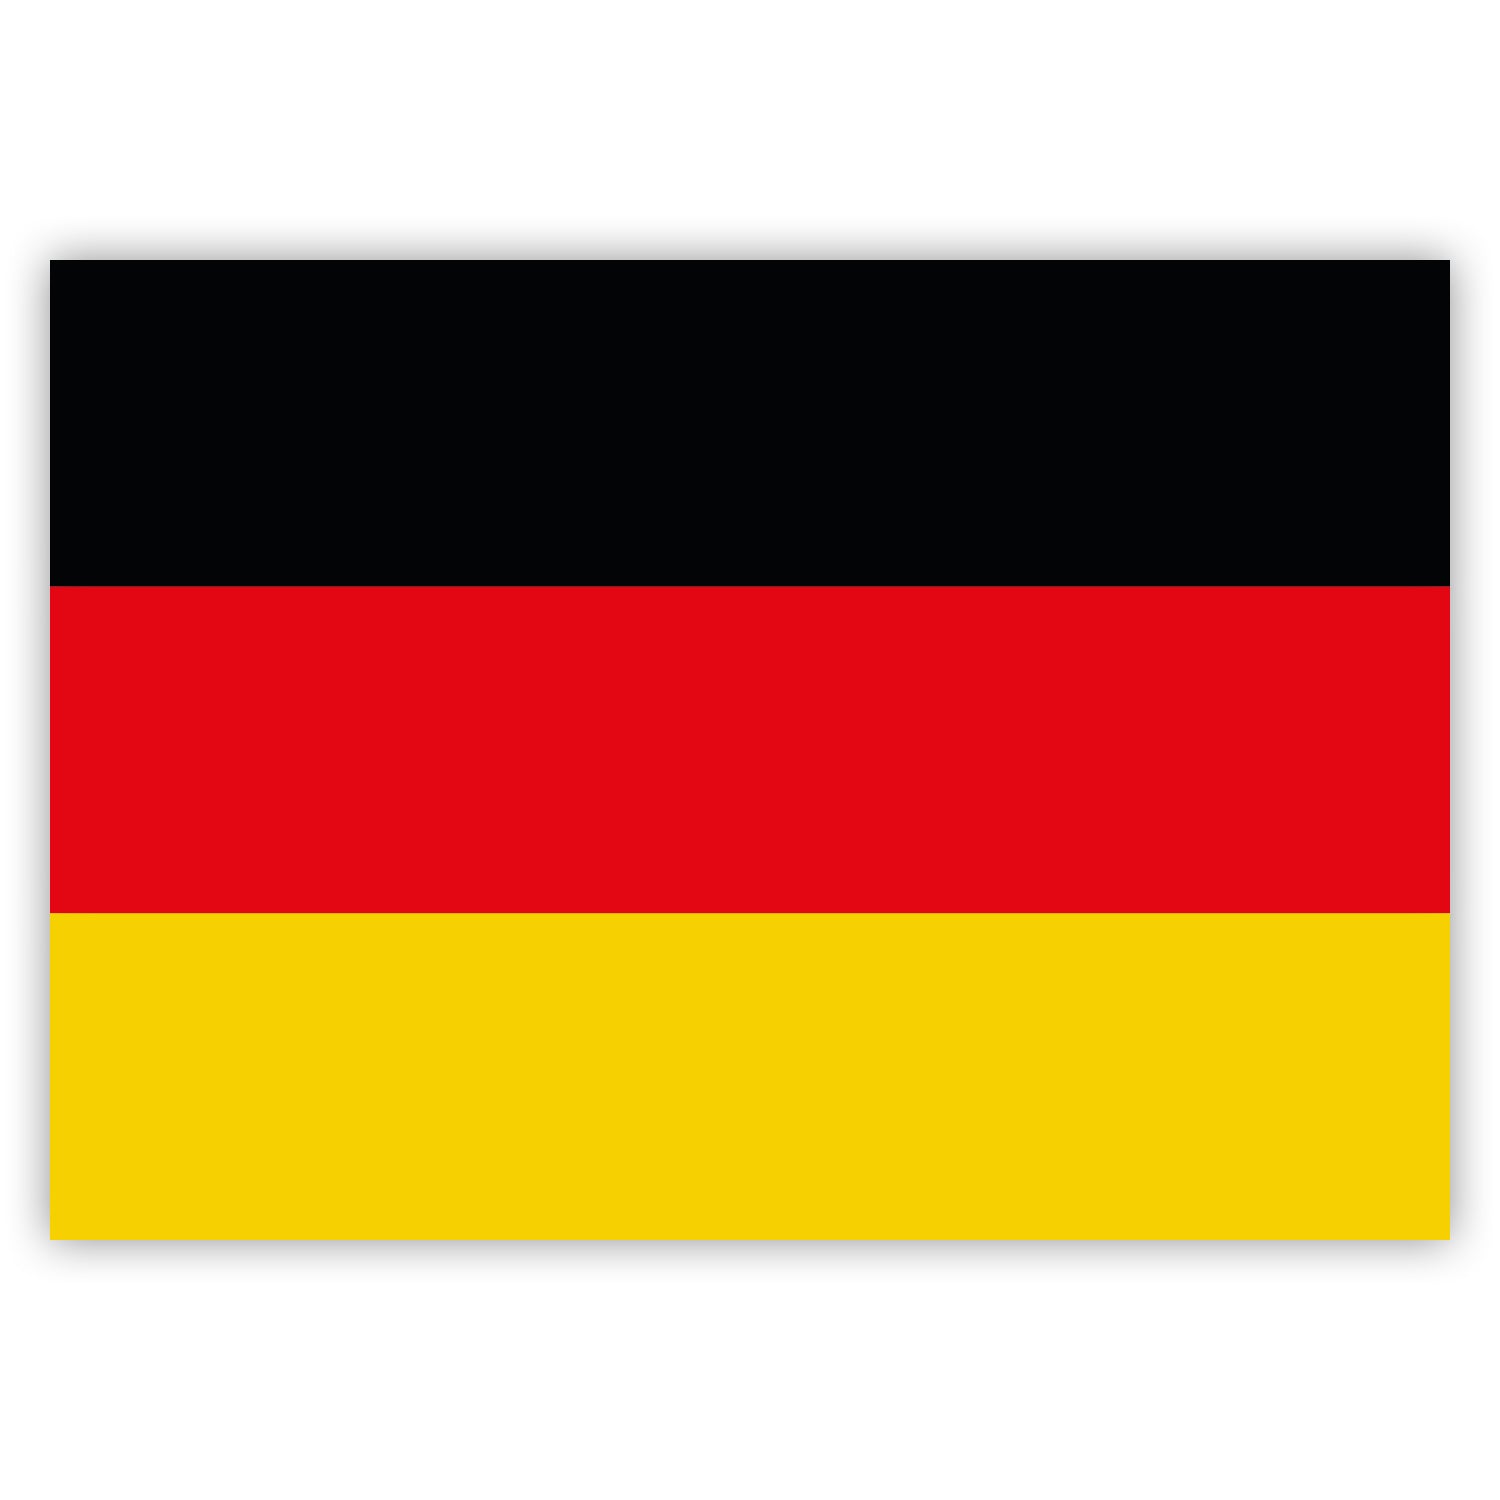 Sticker Germany my home love flag flag 8 x 5 cm car sticker